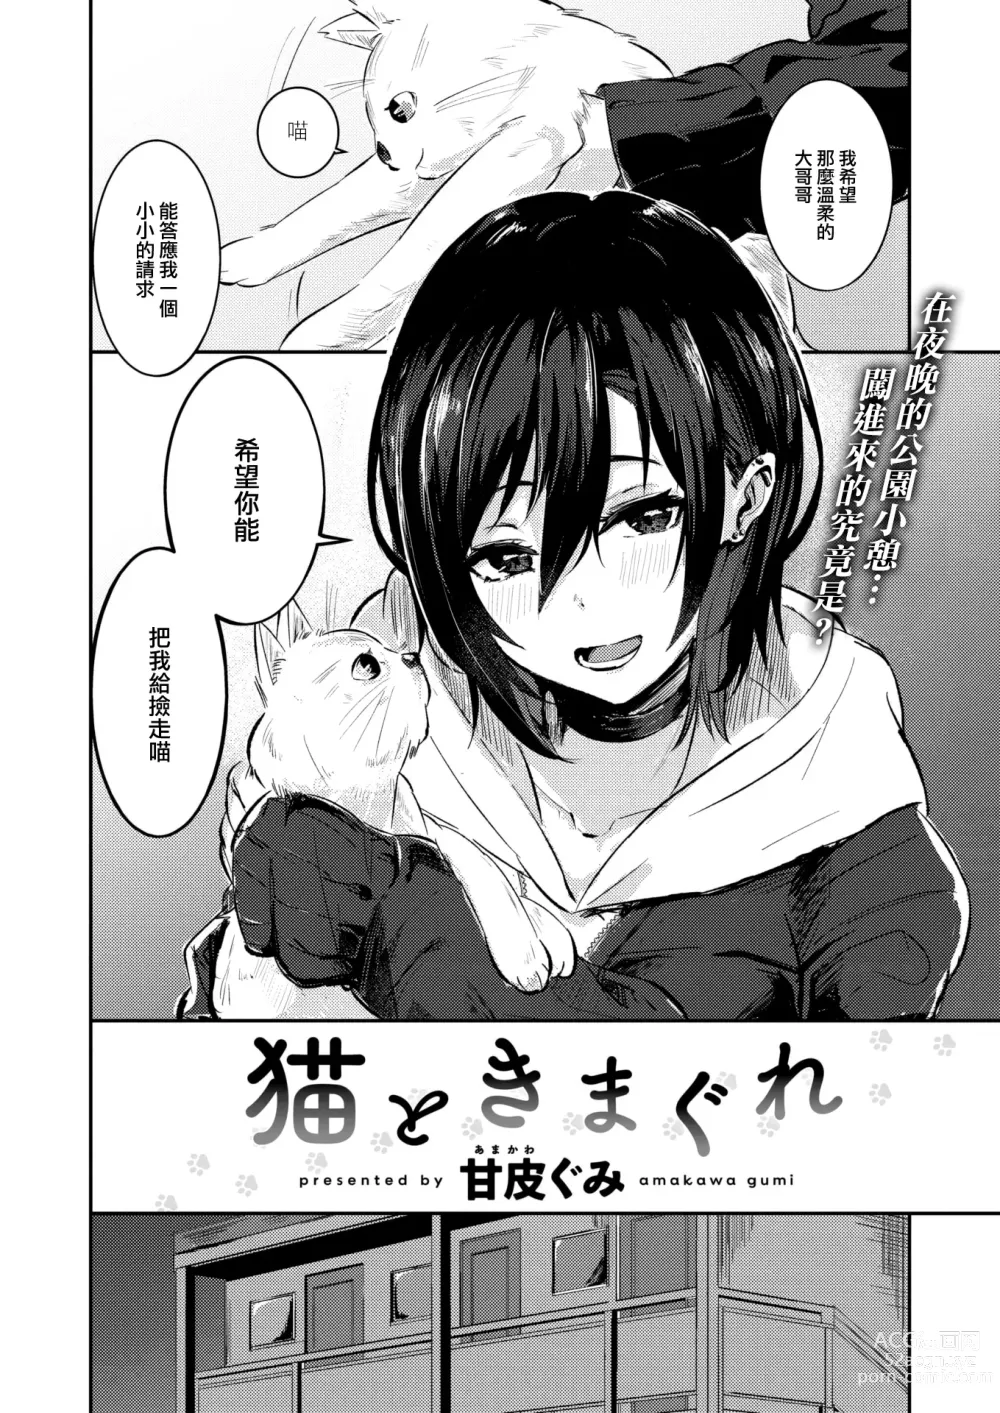 Page 3 of manga Neko to Kimagure